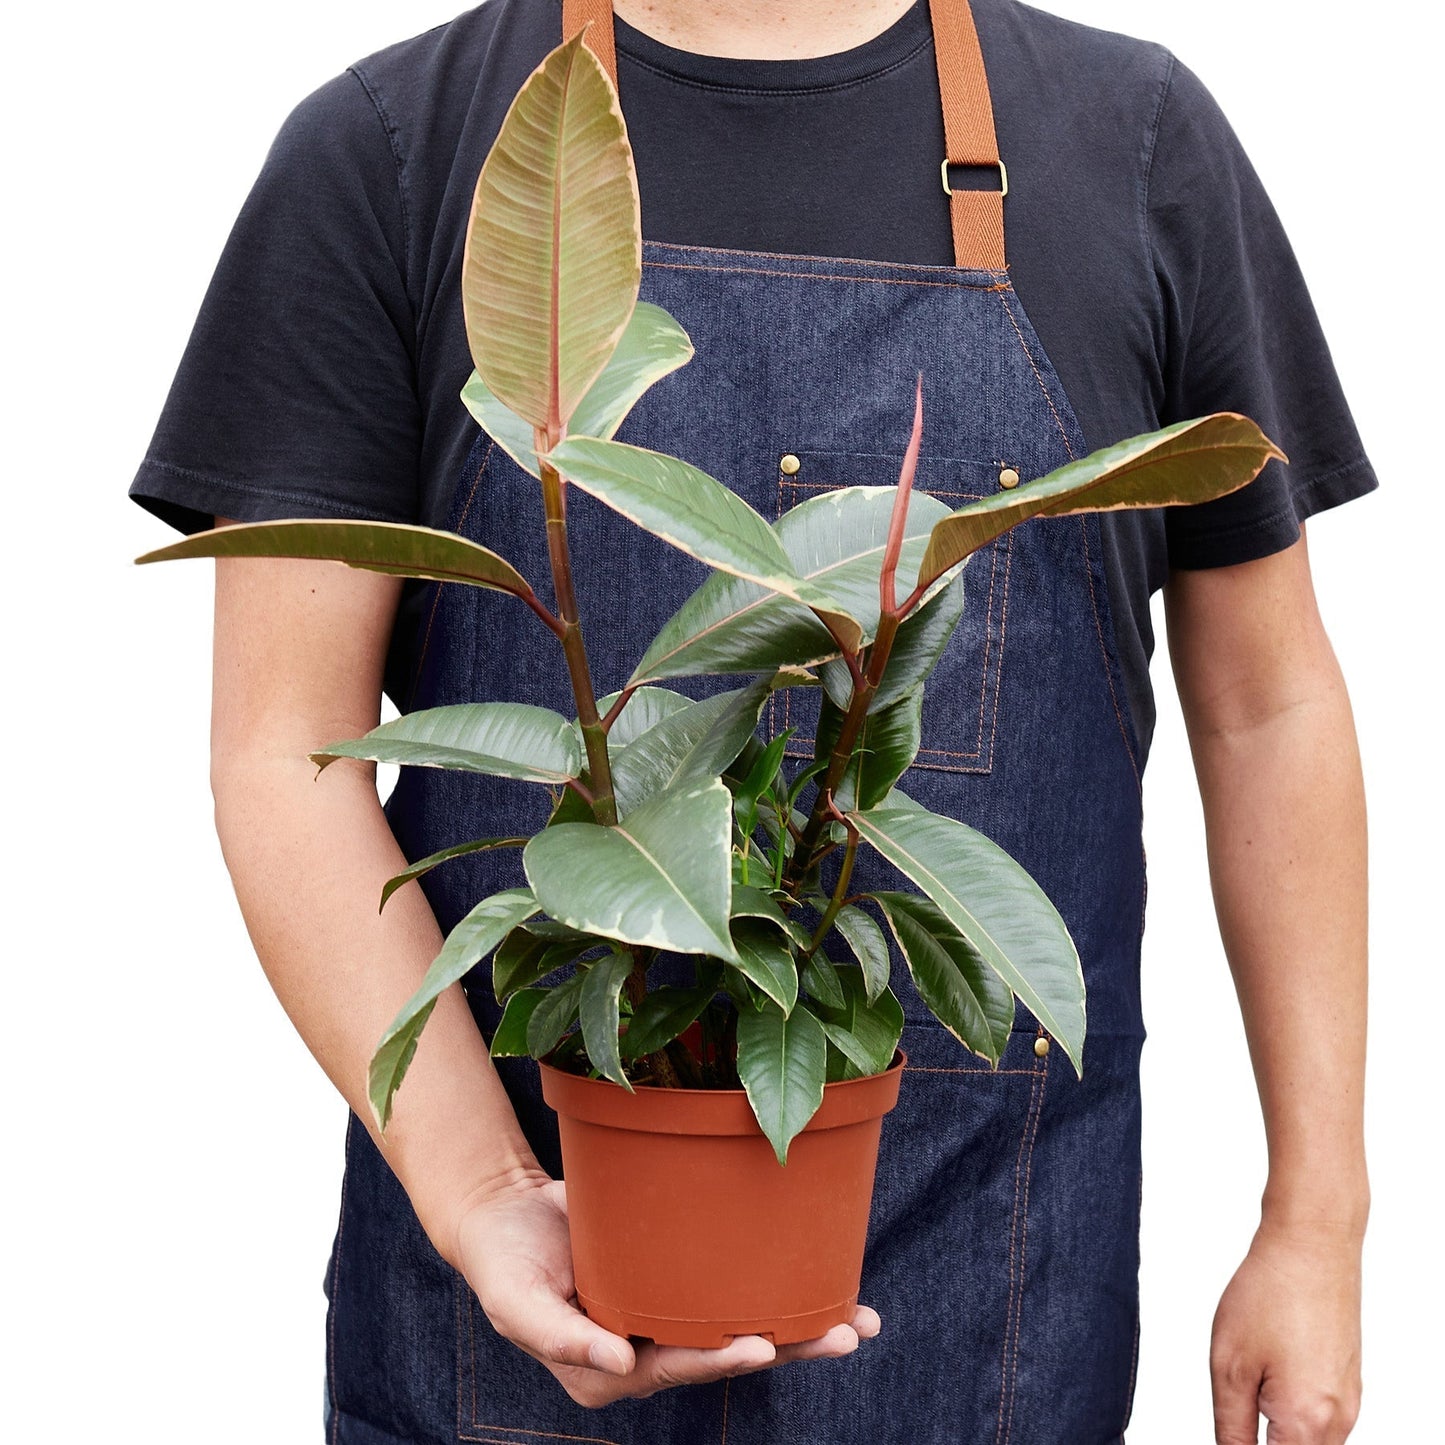 Ficus Elastica 'Tineke' - 6" Pot - NURSERY POT ONLY